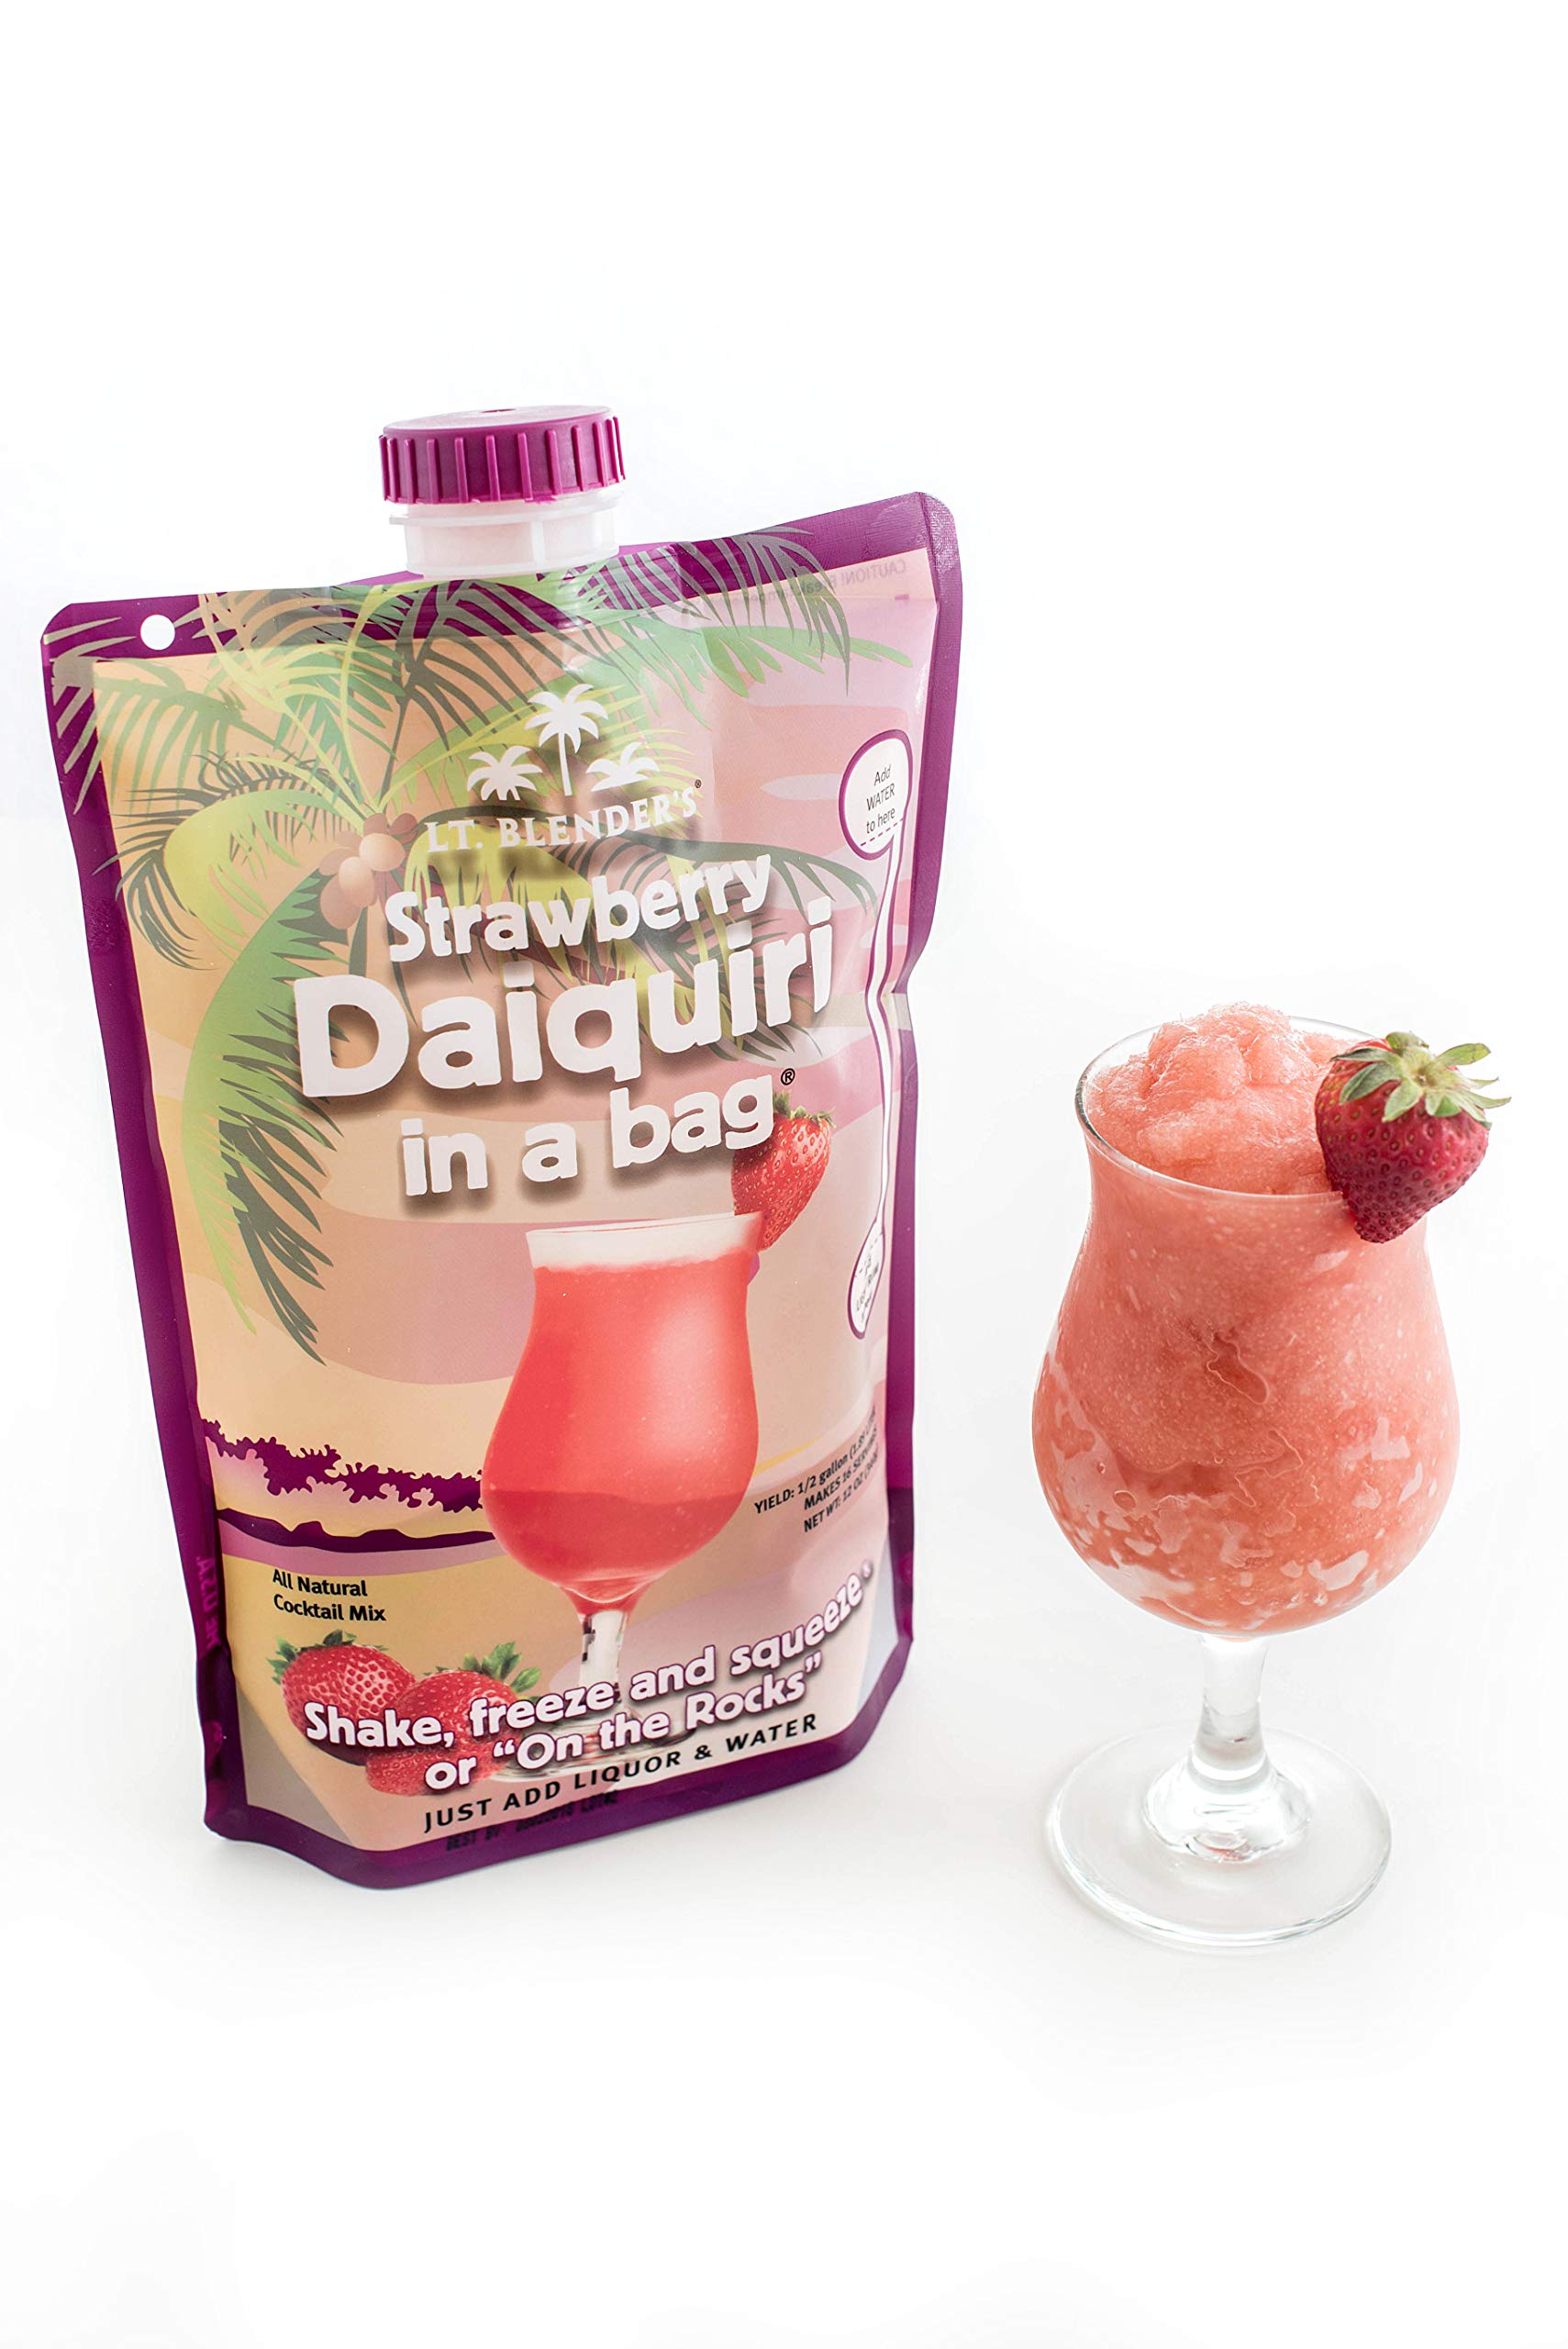 Lt. Blender's Strawberry Daiquiri in a Bag – Strawberry Daiquiri Mix - Each Bag Makes 1/2 Gallon of Frozen Strawberry Daiquiris – All Natural C...